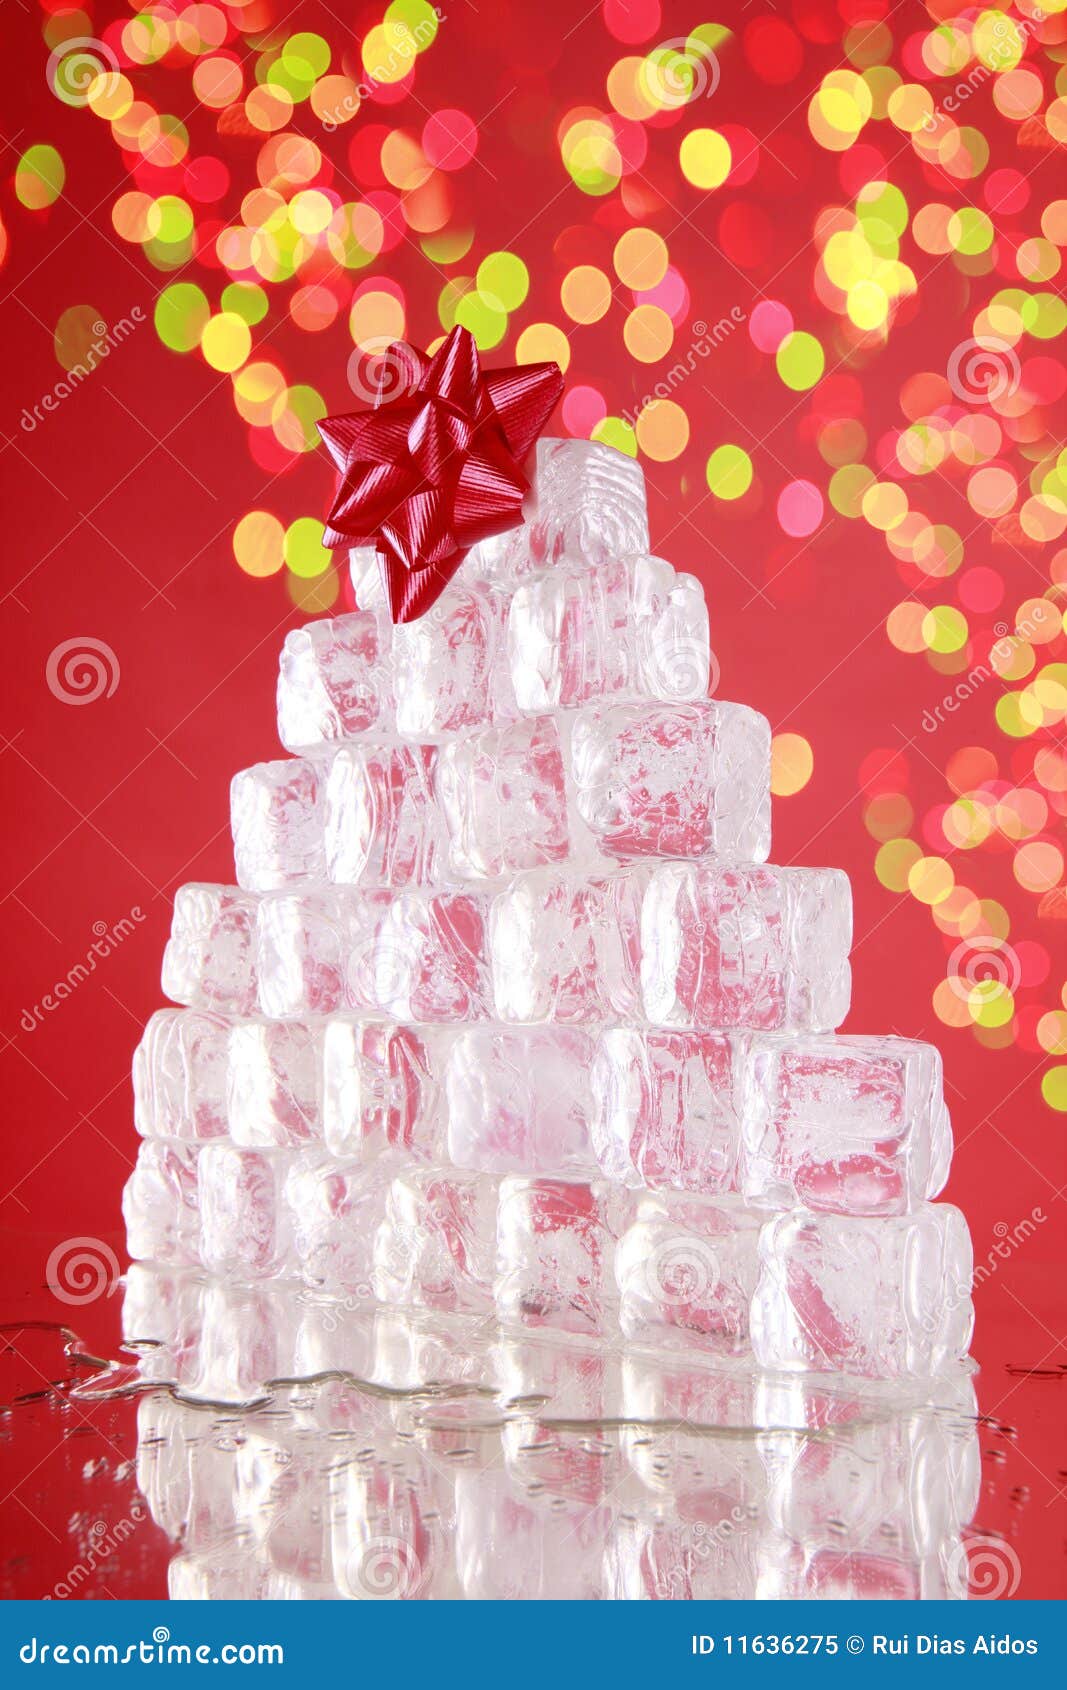 https://thumbs.dreamstime.com/z/ice-cube-christmas-tree-11636275.jpg